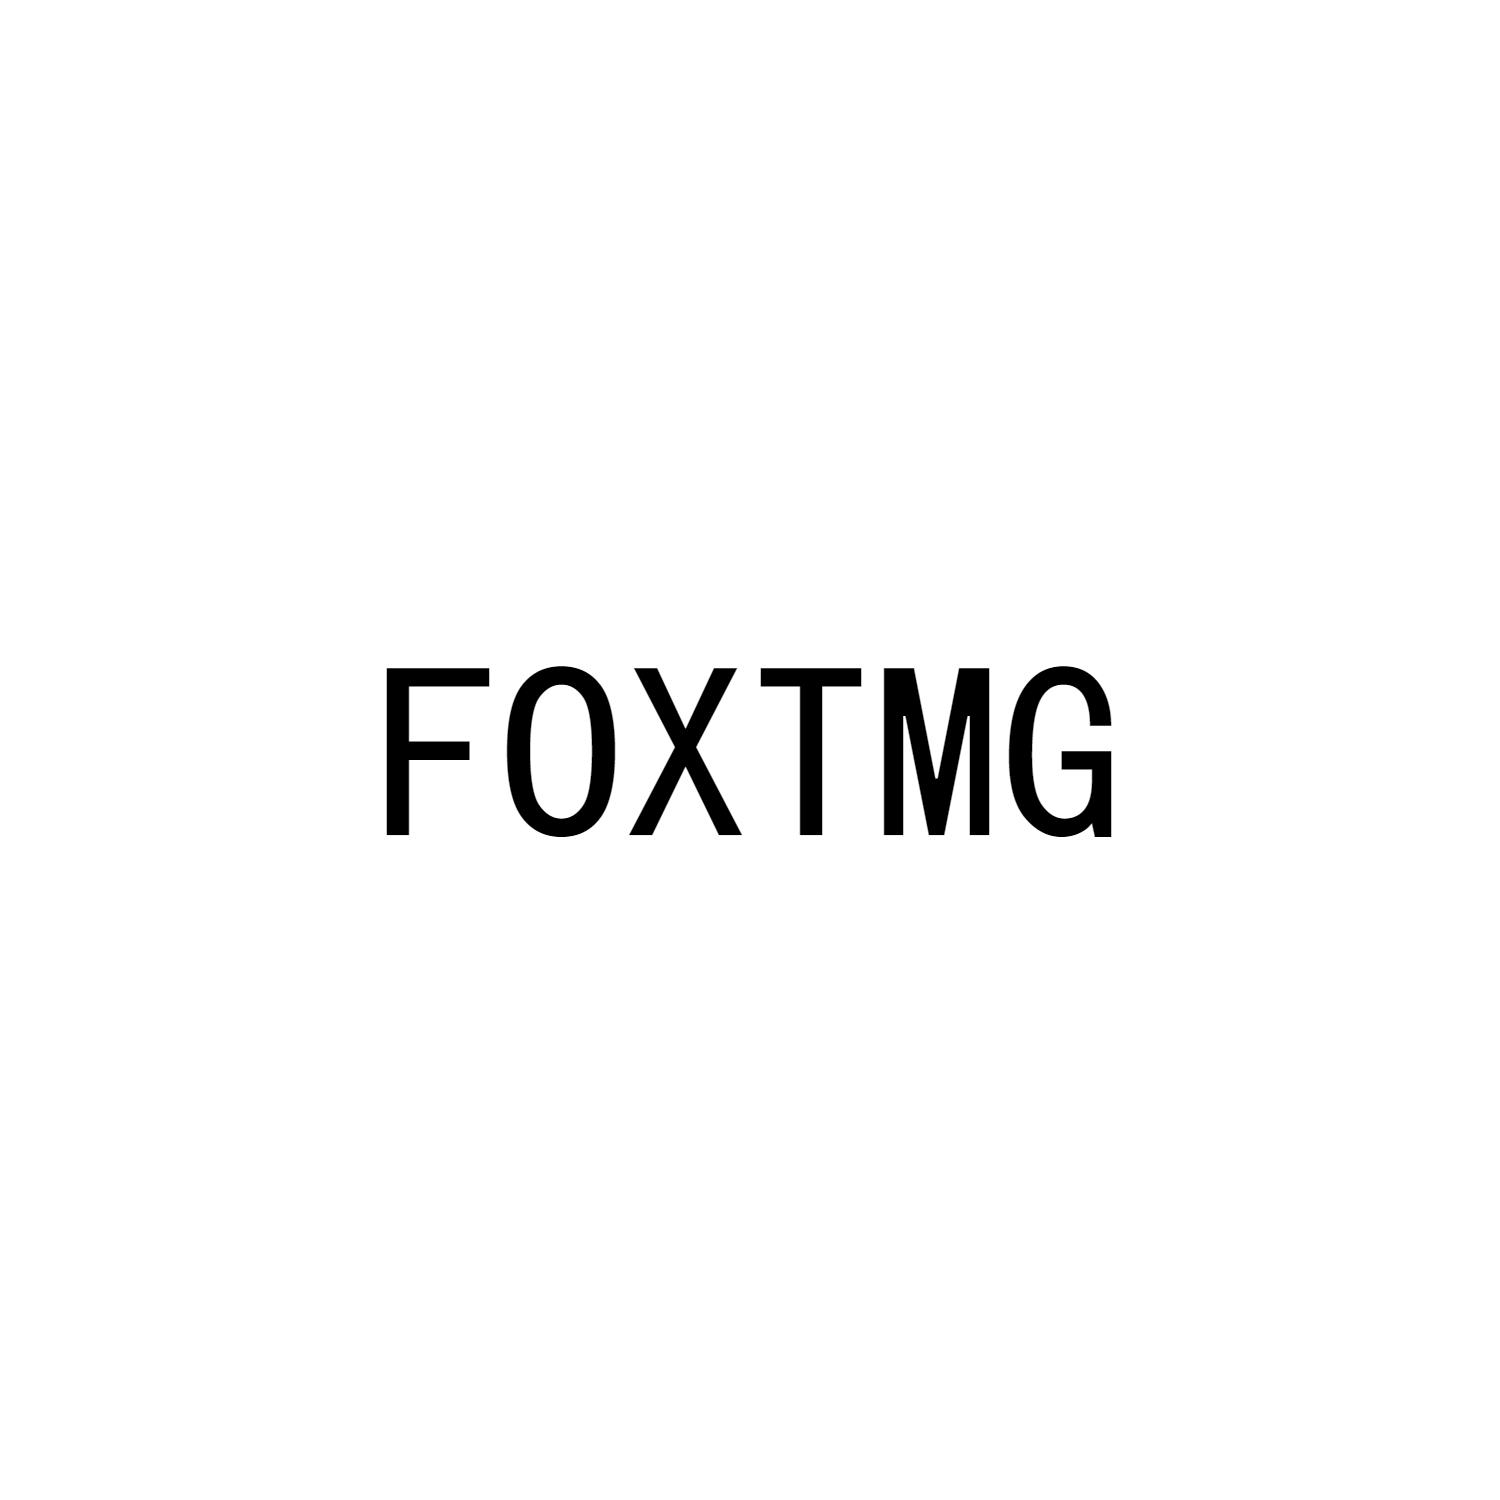 FOXTMG